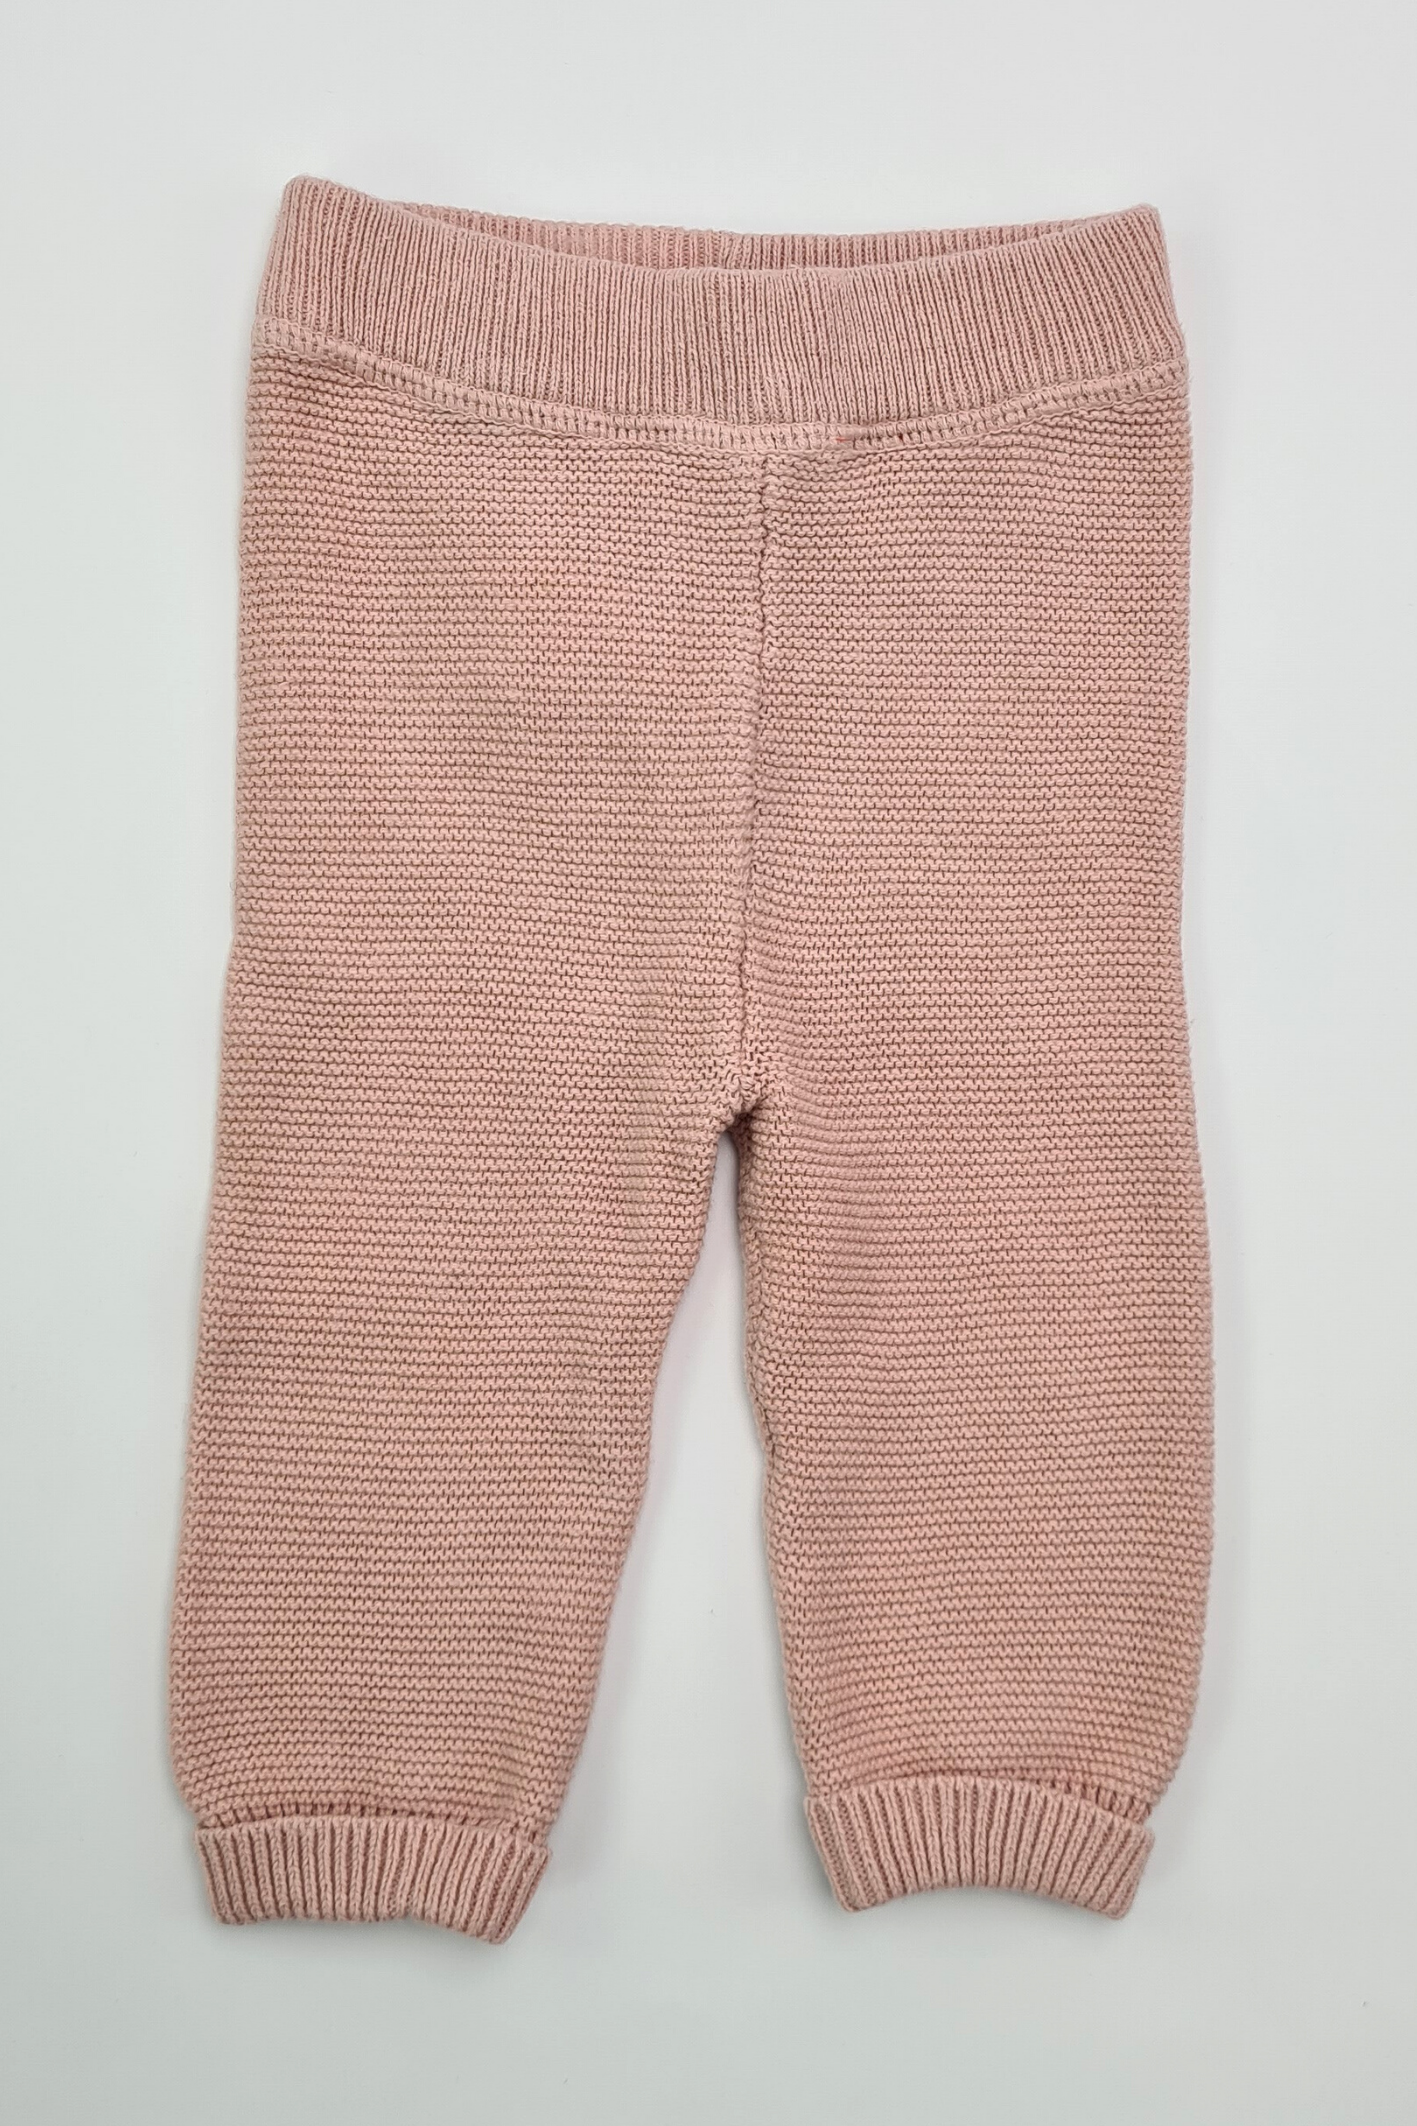 1 m (10 lbs) – Rosa Strick-Leggings aus 100 % Baumwolle (F&amp;F)